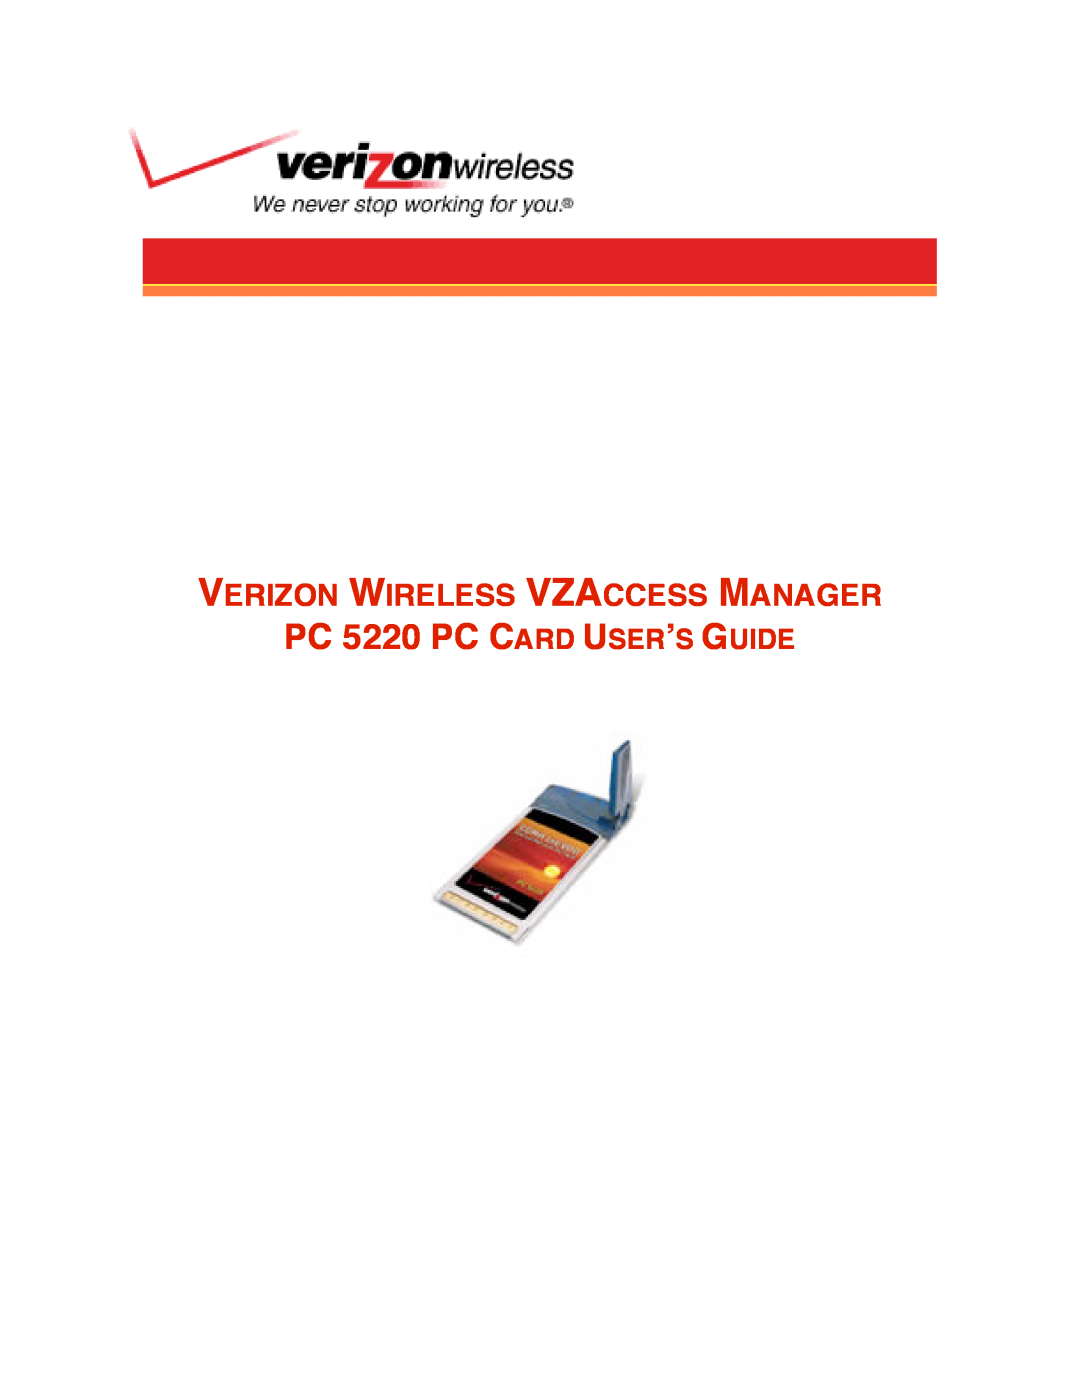 Audiovox manual PC 5220 PC CARD USER’S GUIDE, Verizon Wireless Vzaccess Manager 